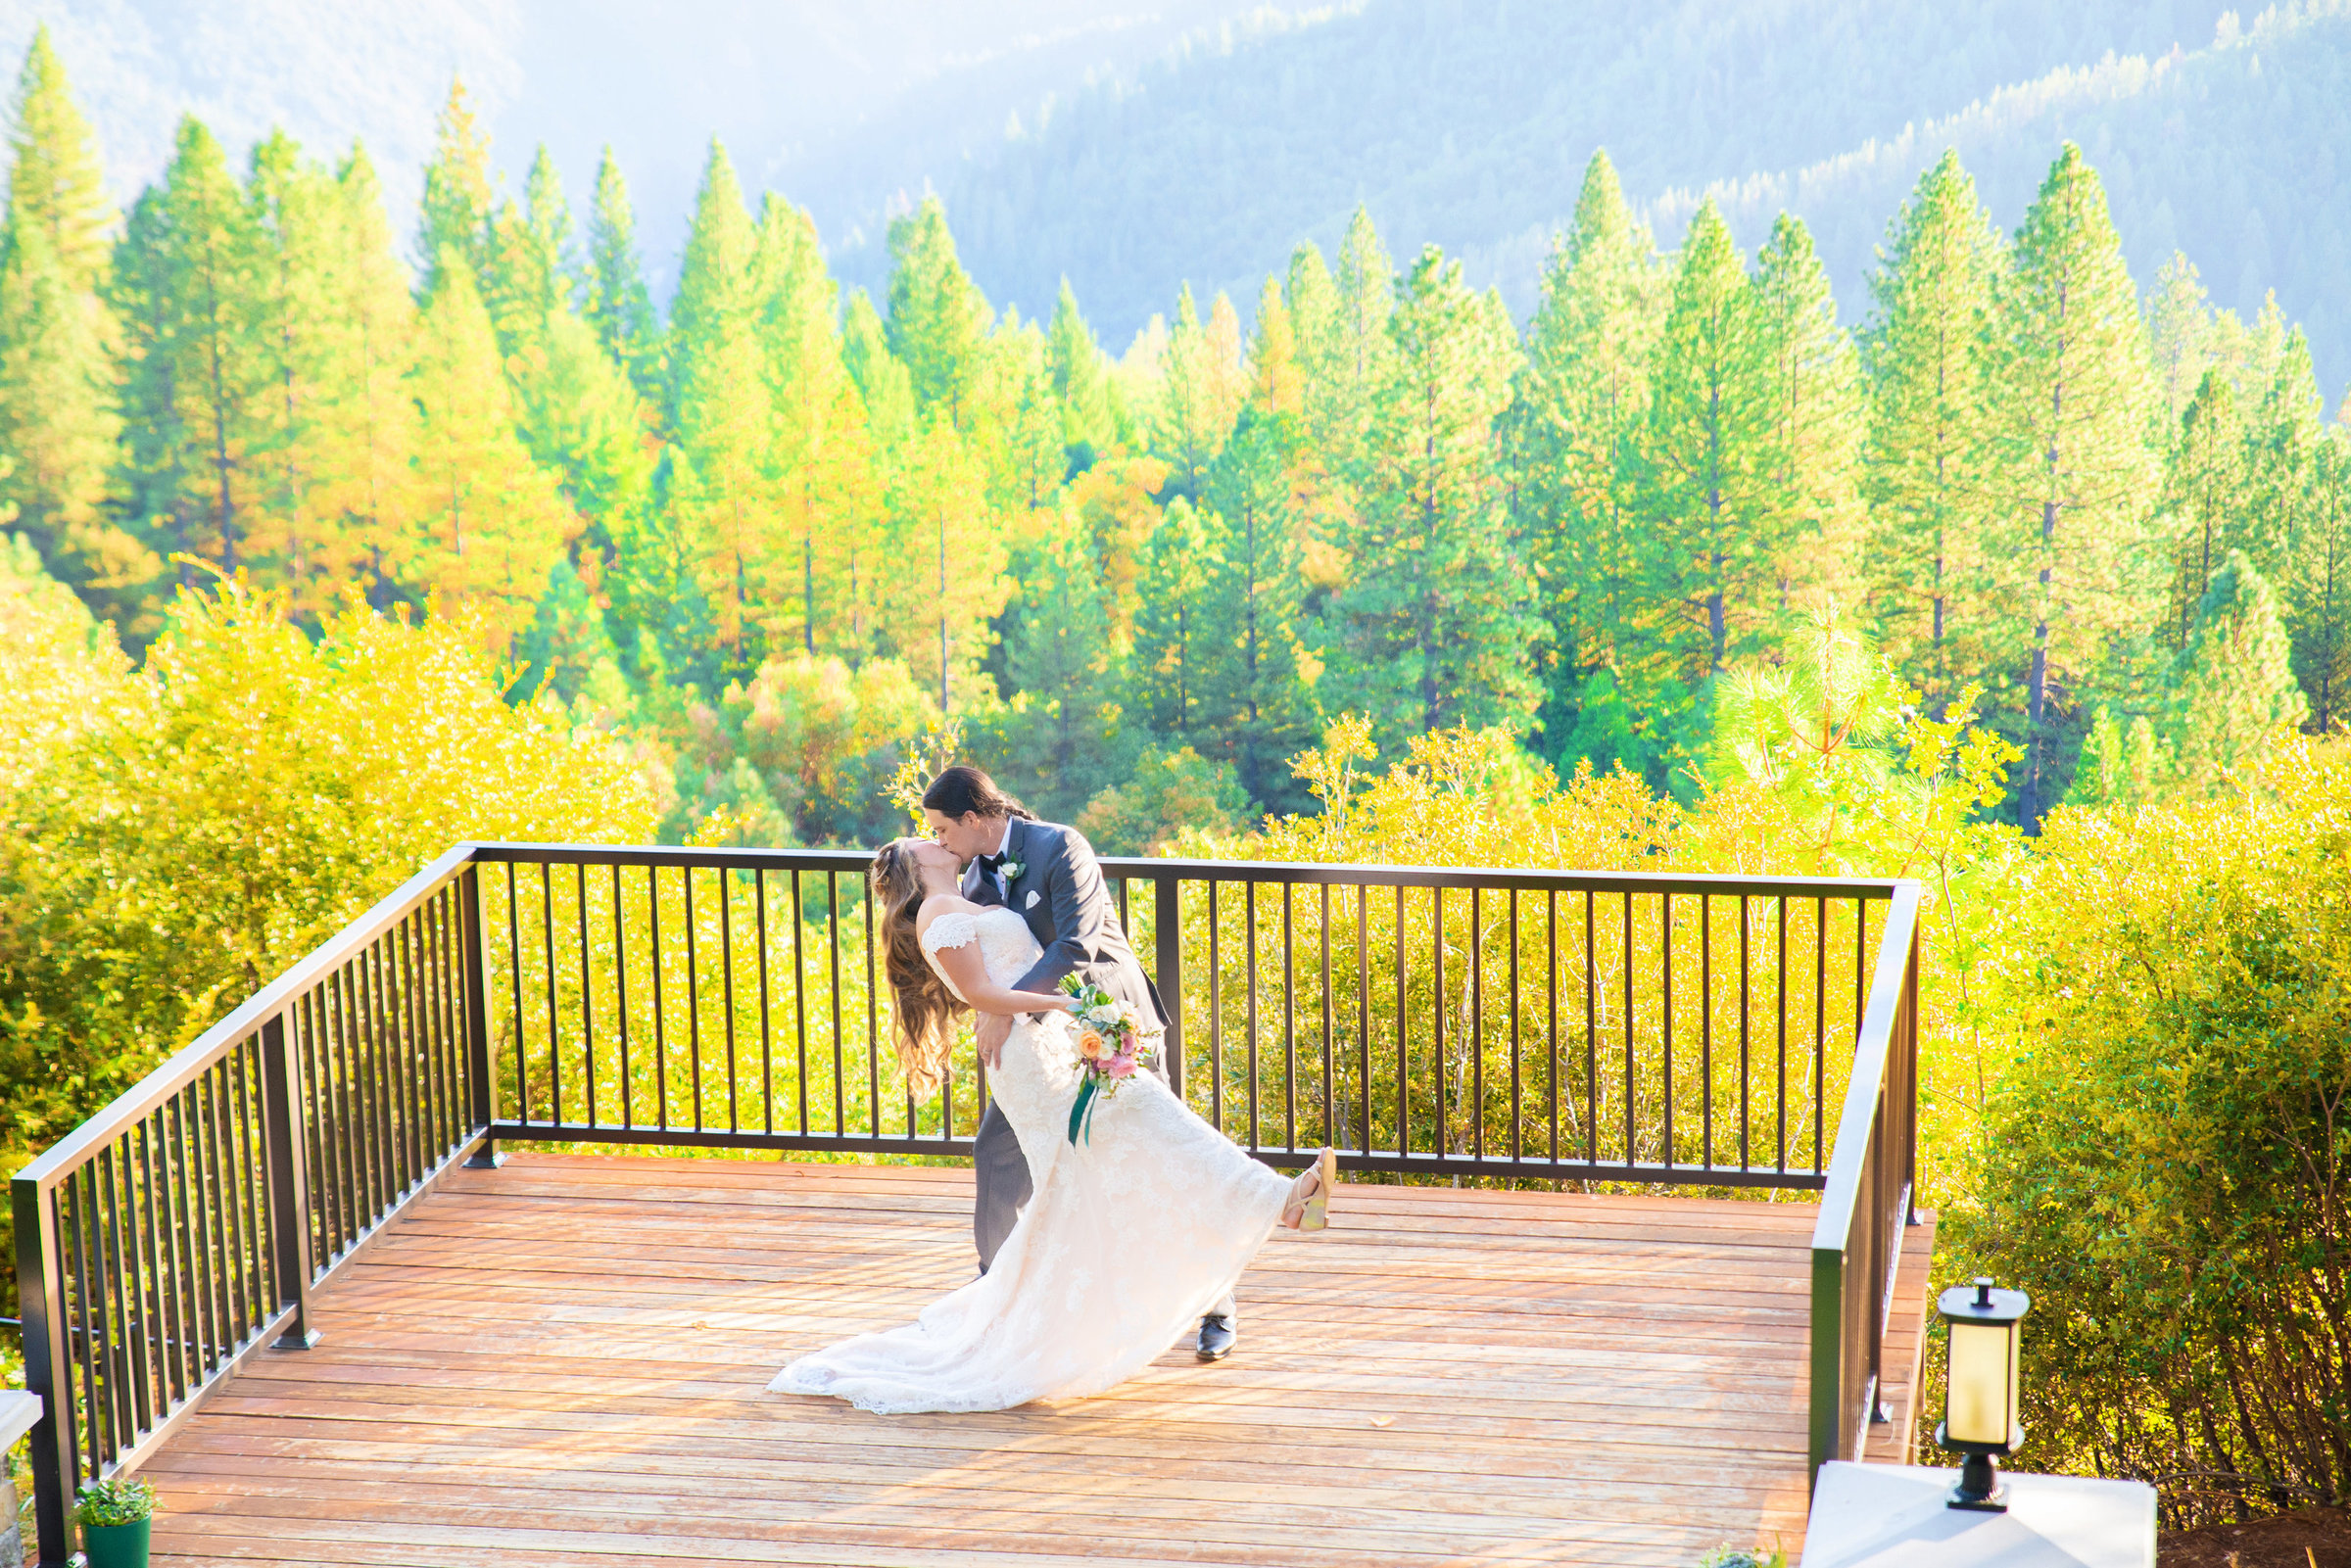 Desrae & Robert Wedding at Mountain shadows retreat With AshleyRo Photography_-828